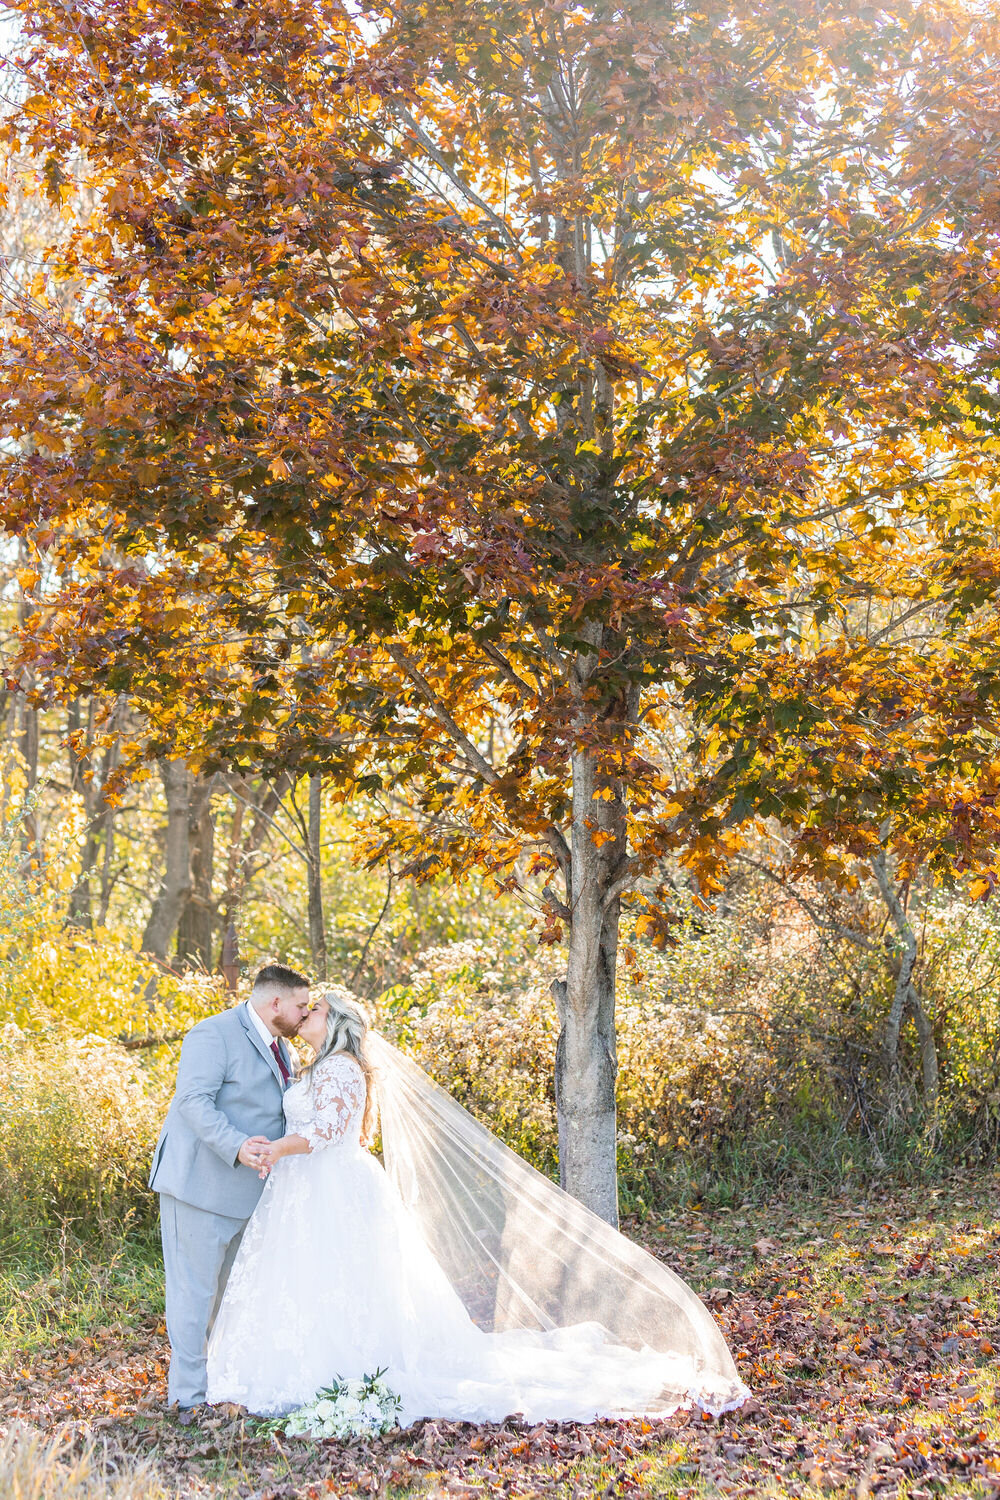 Hannah-Barlow-Photography-Fall-Wedding-by-Tree